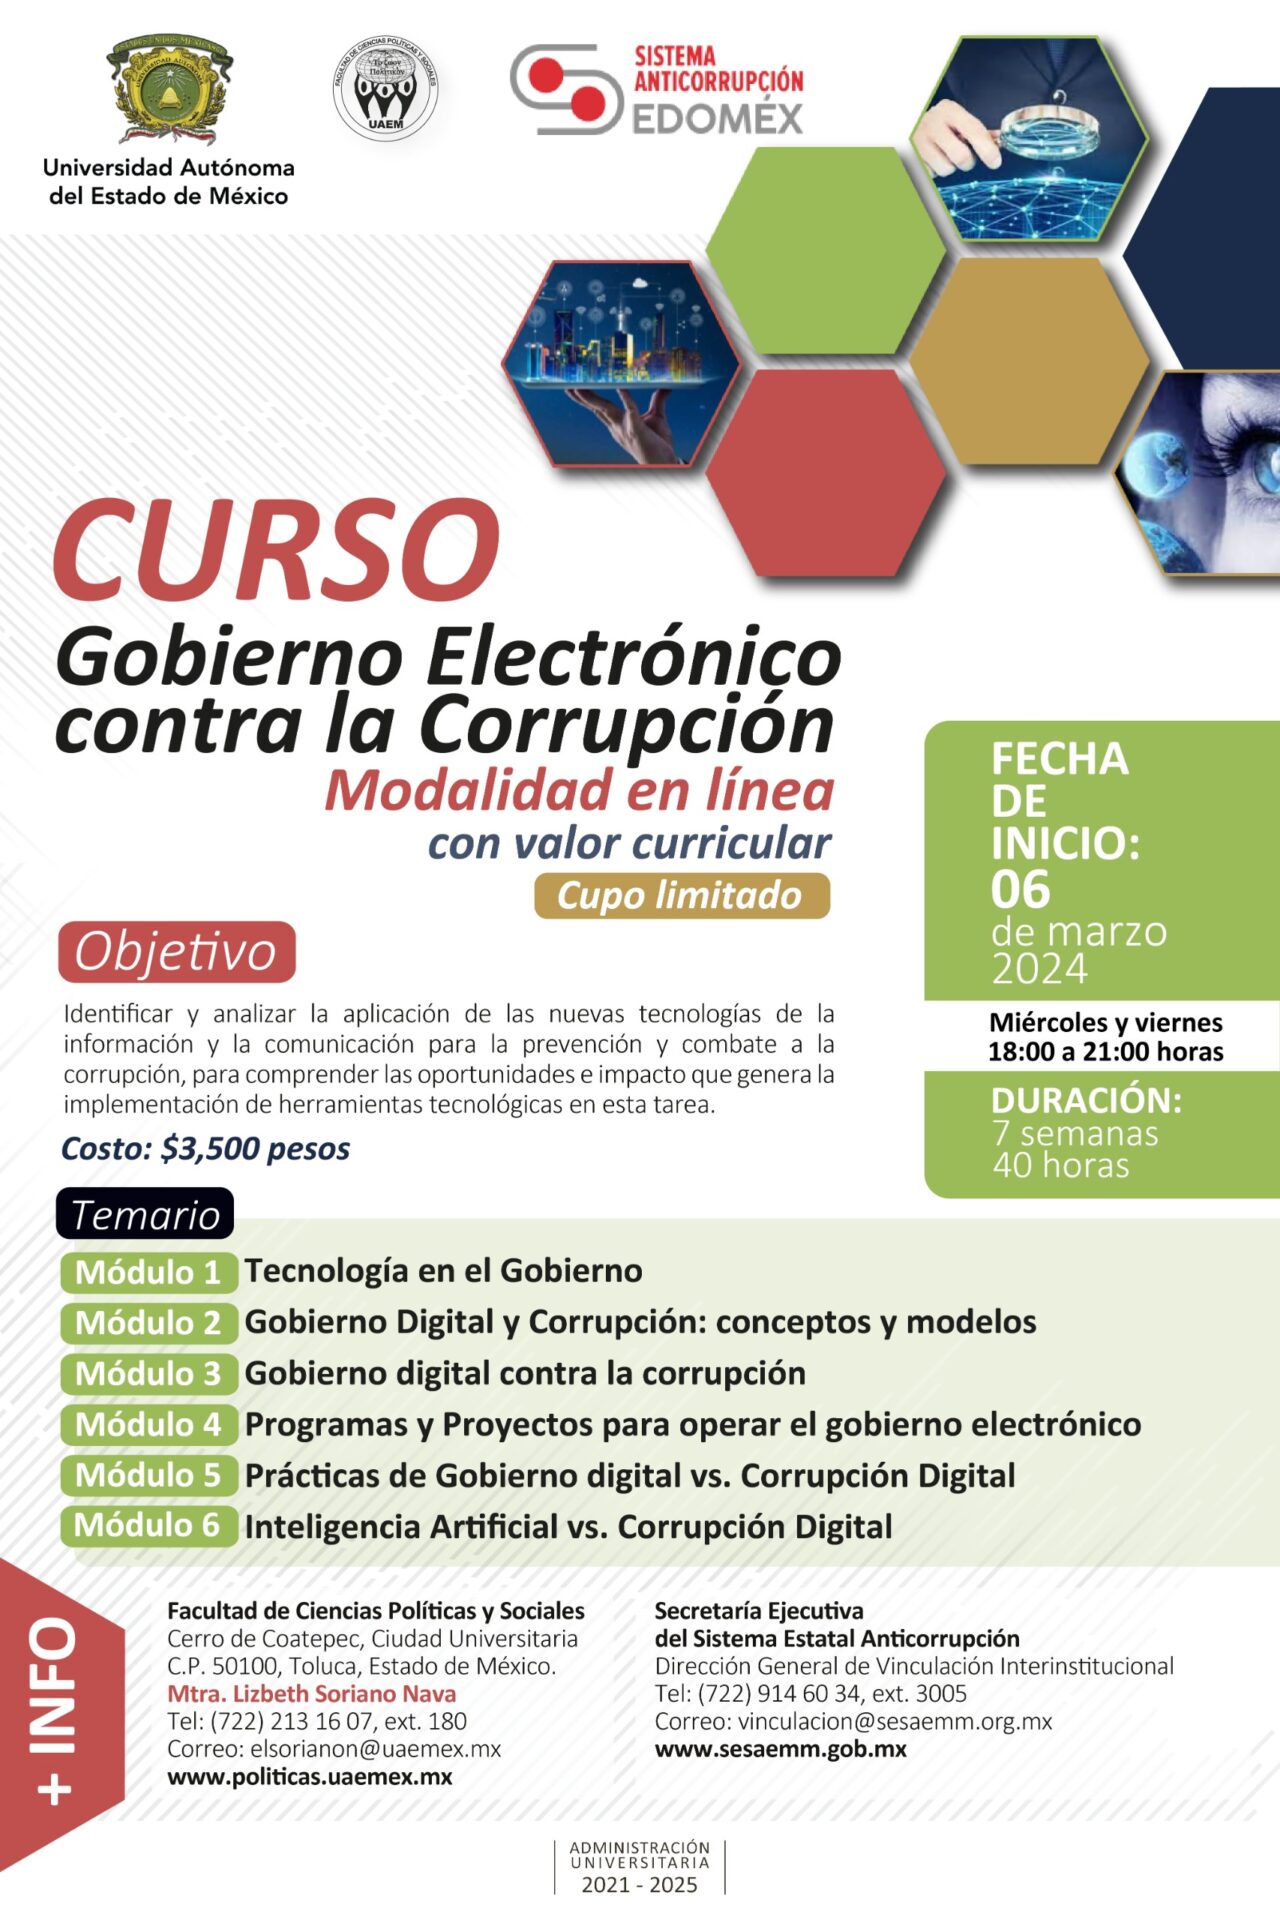 CURSO-Contra-la-Corrupcion-1280x1920.jpeg